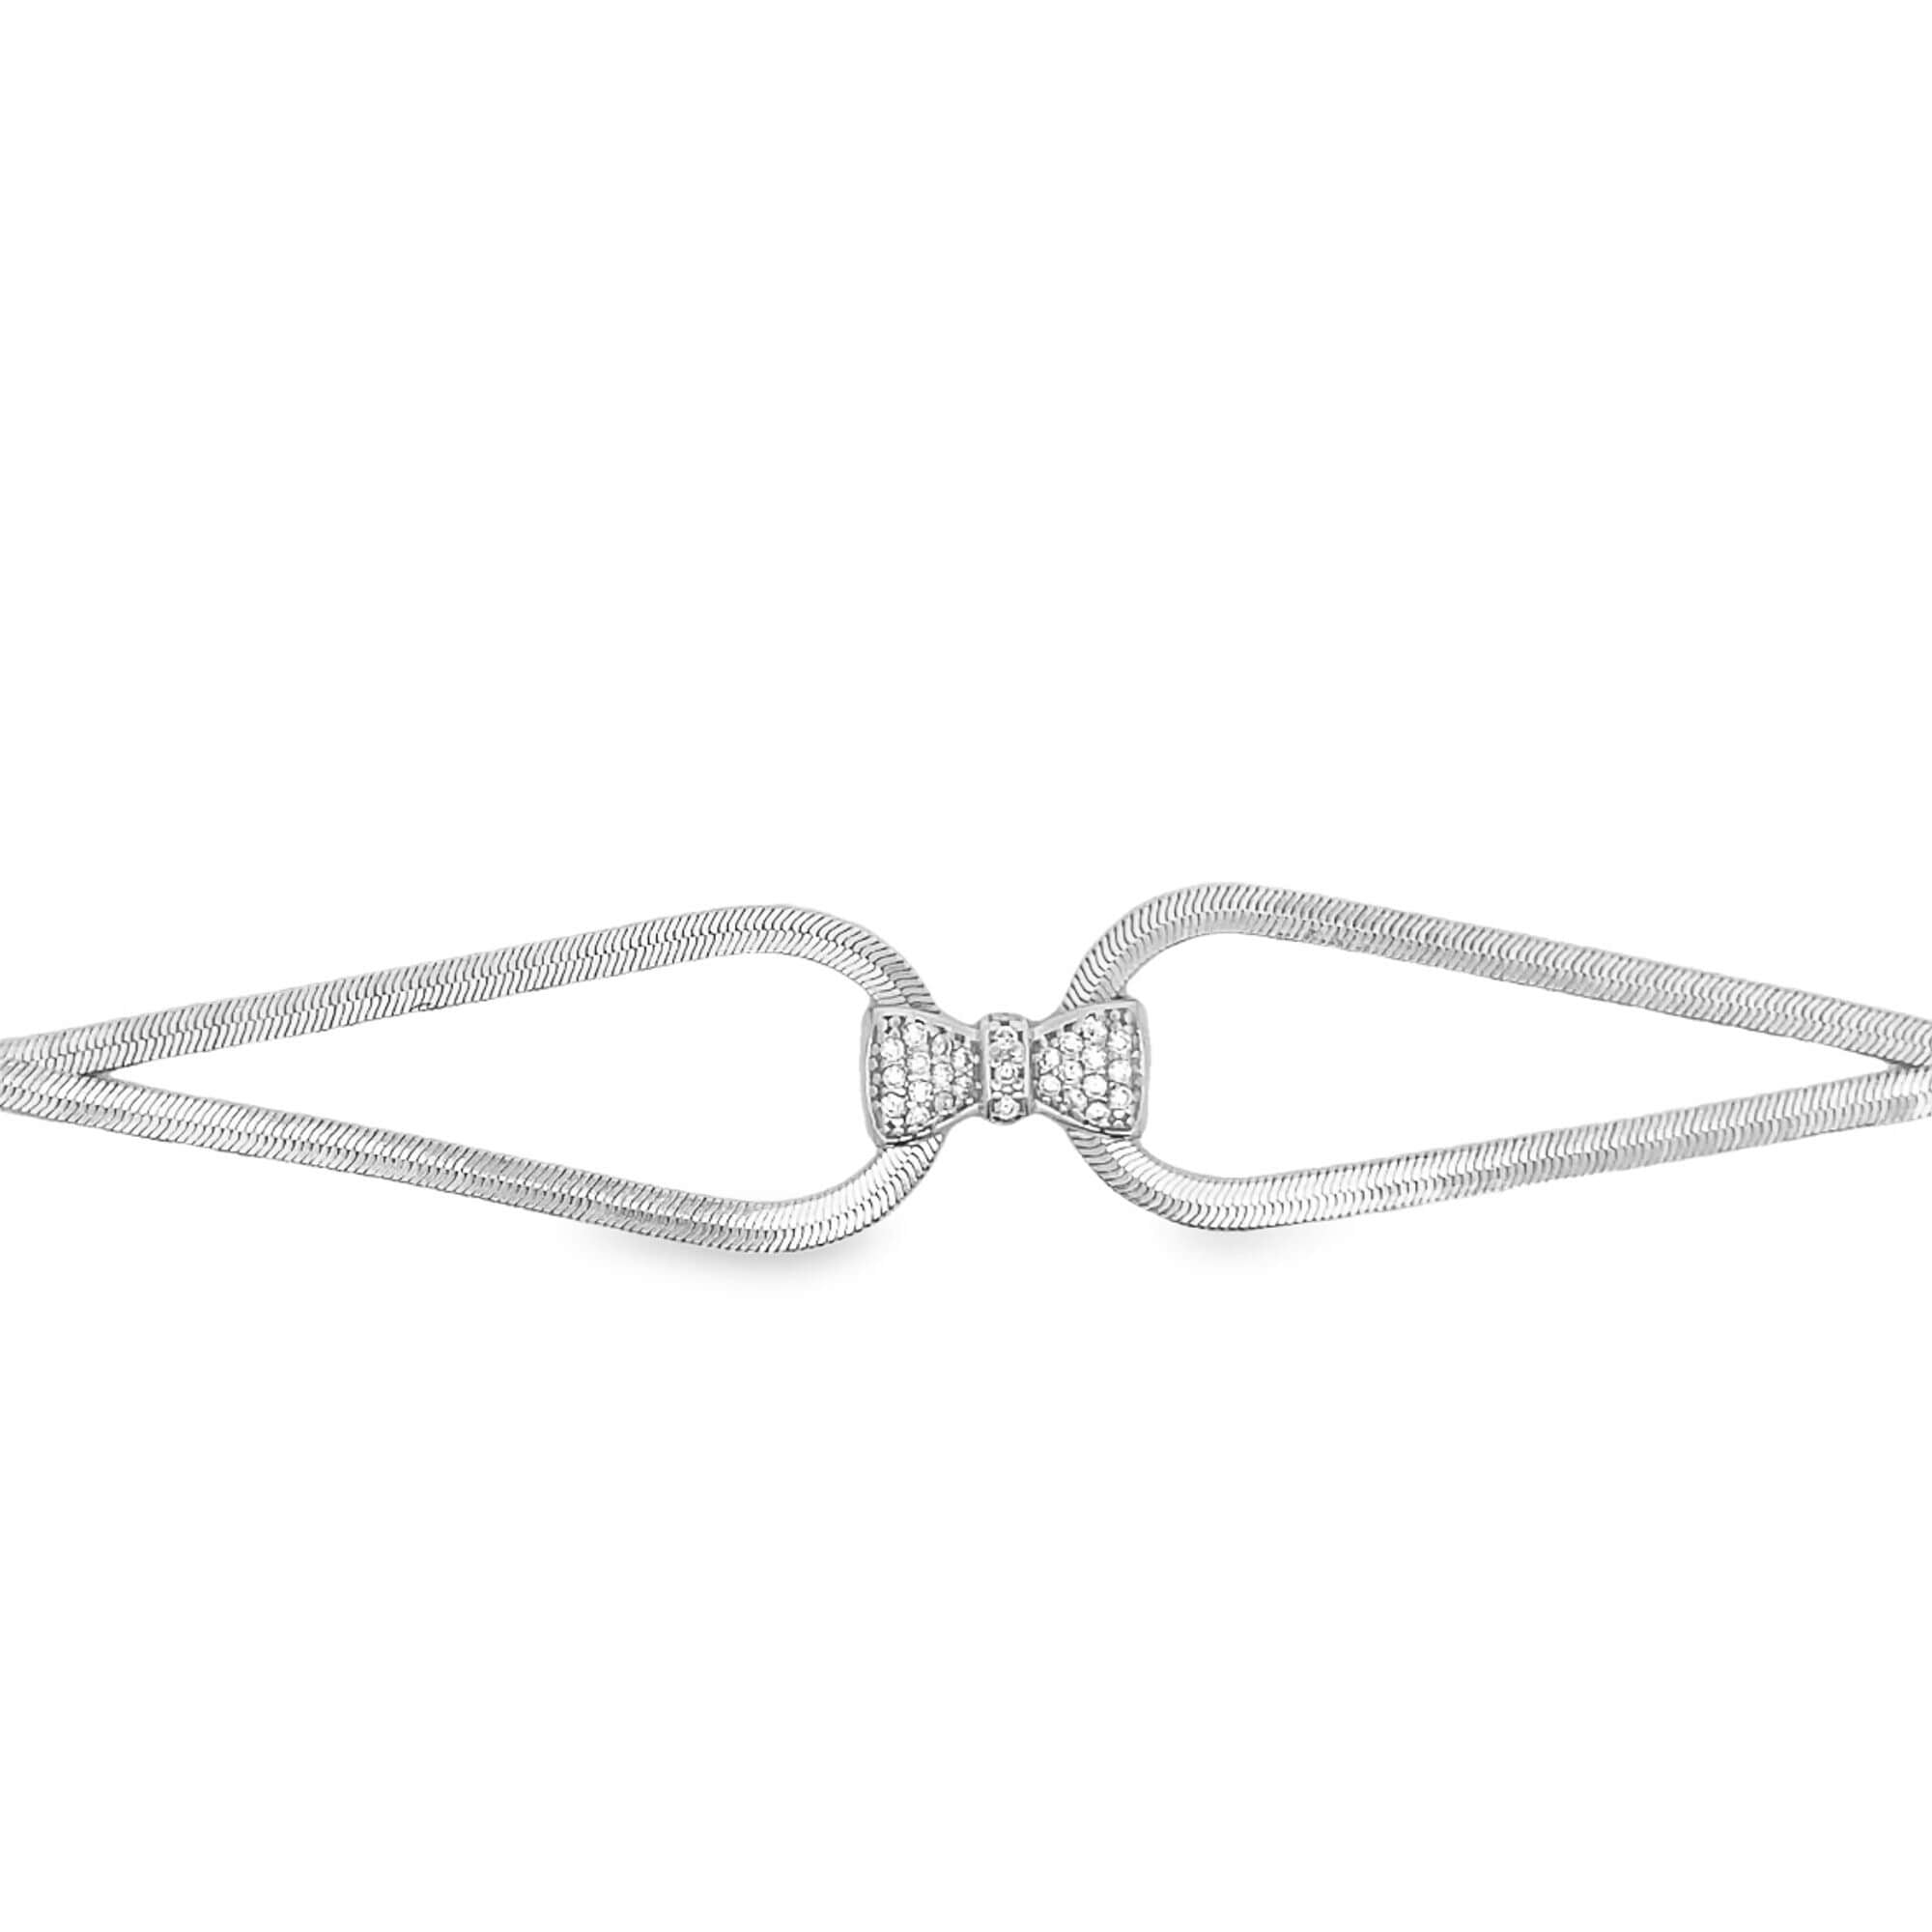 3mm Herringbone Snake Necklace with CZ Bowtie Charm (H254)(I282A)